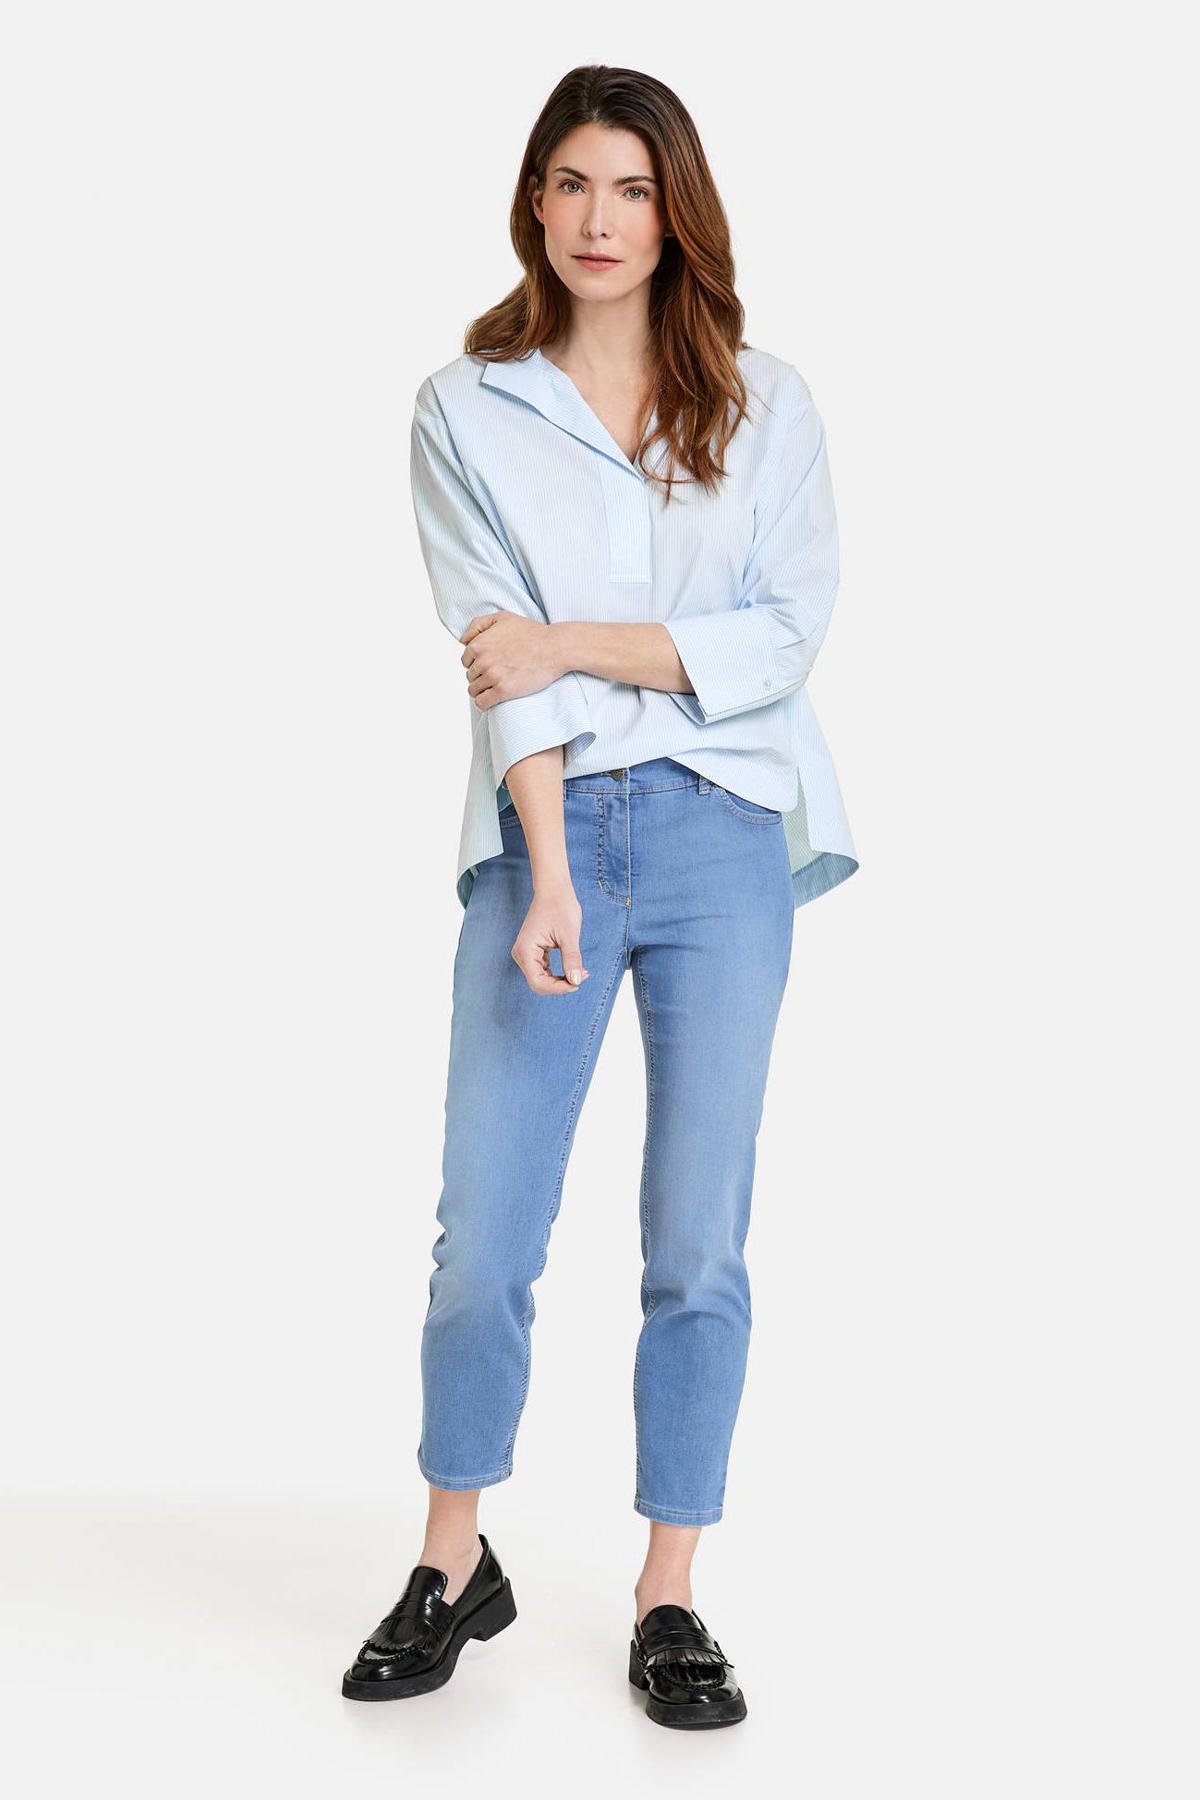 Gerry Weber slim fit jeans 7/8 light | wehkamp